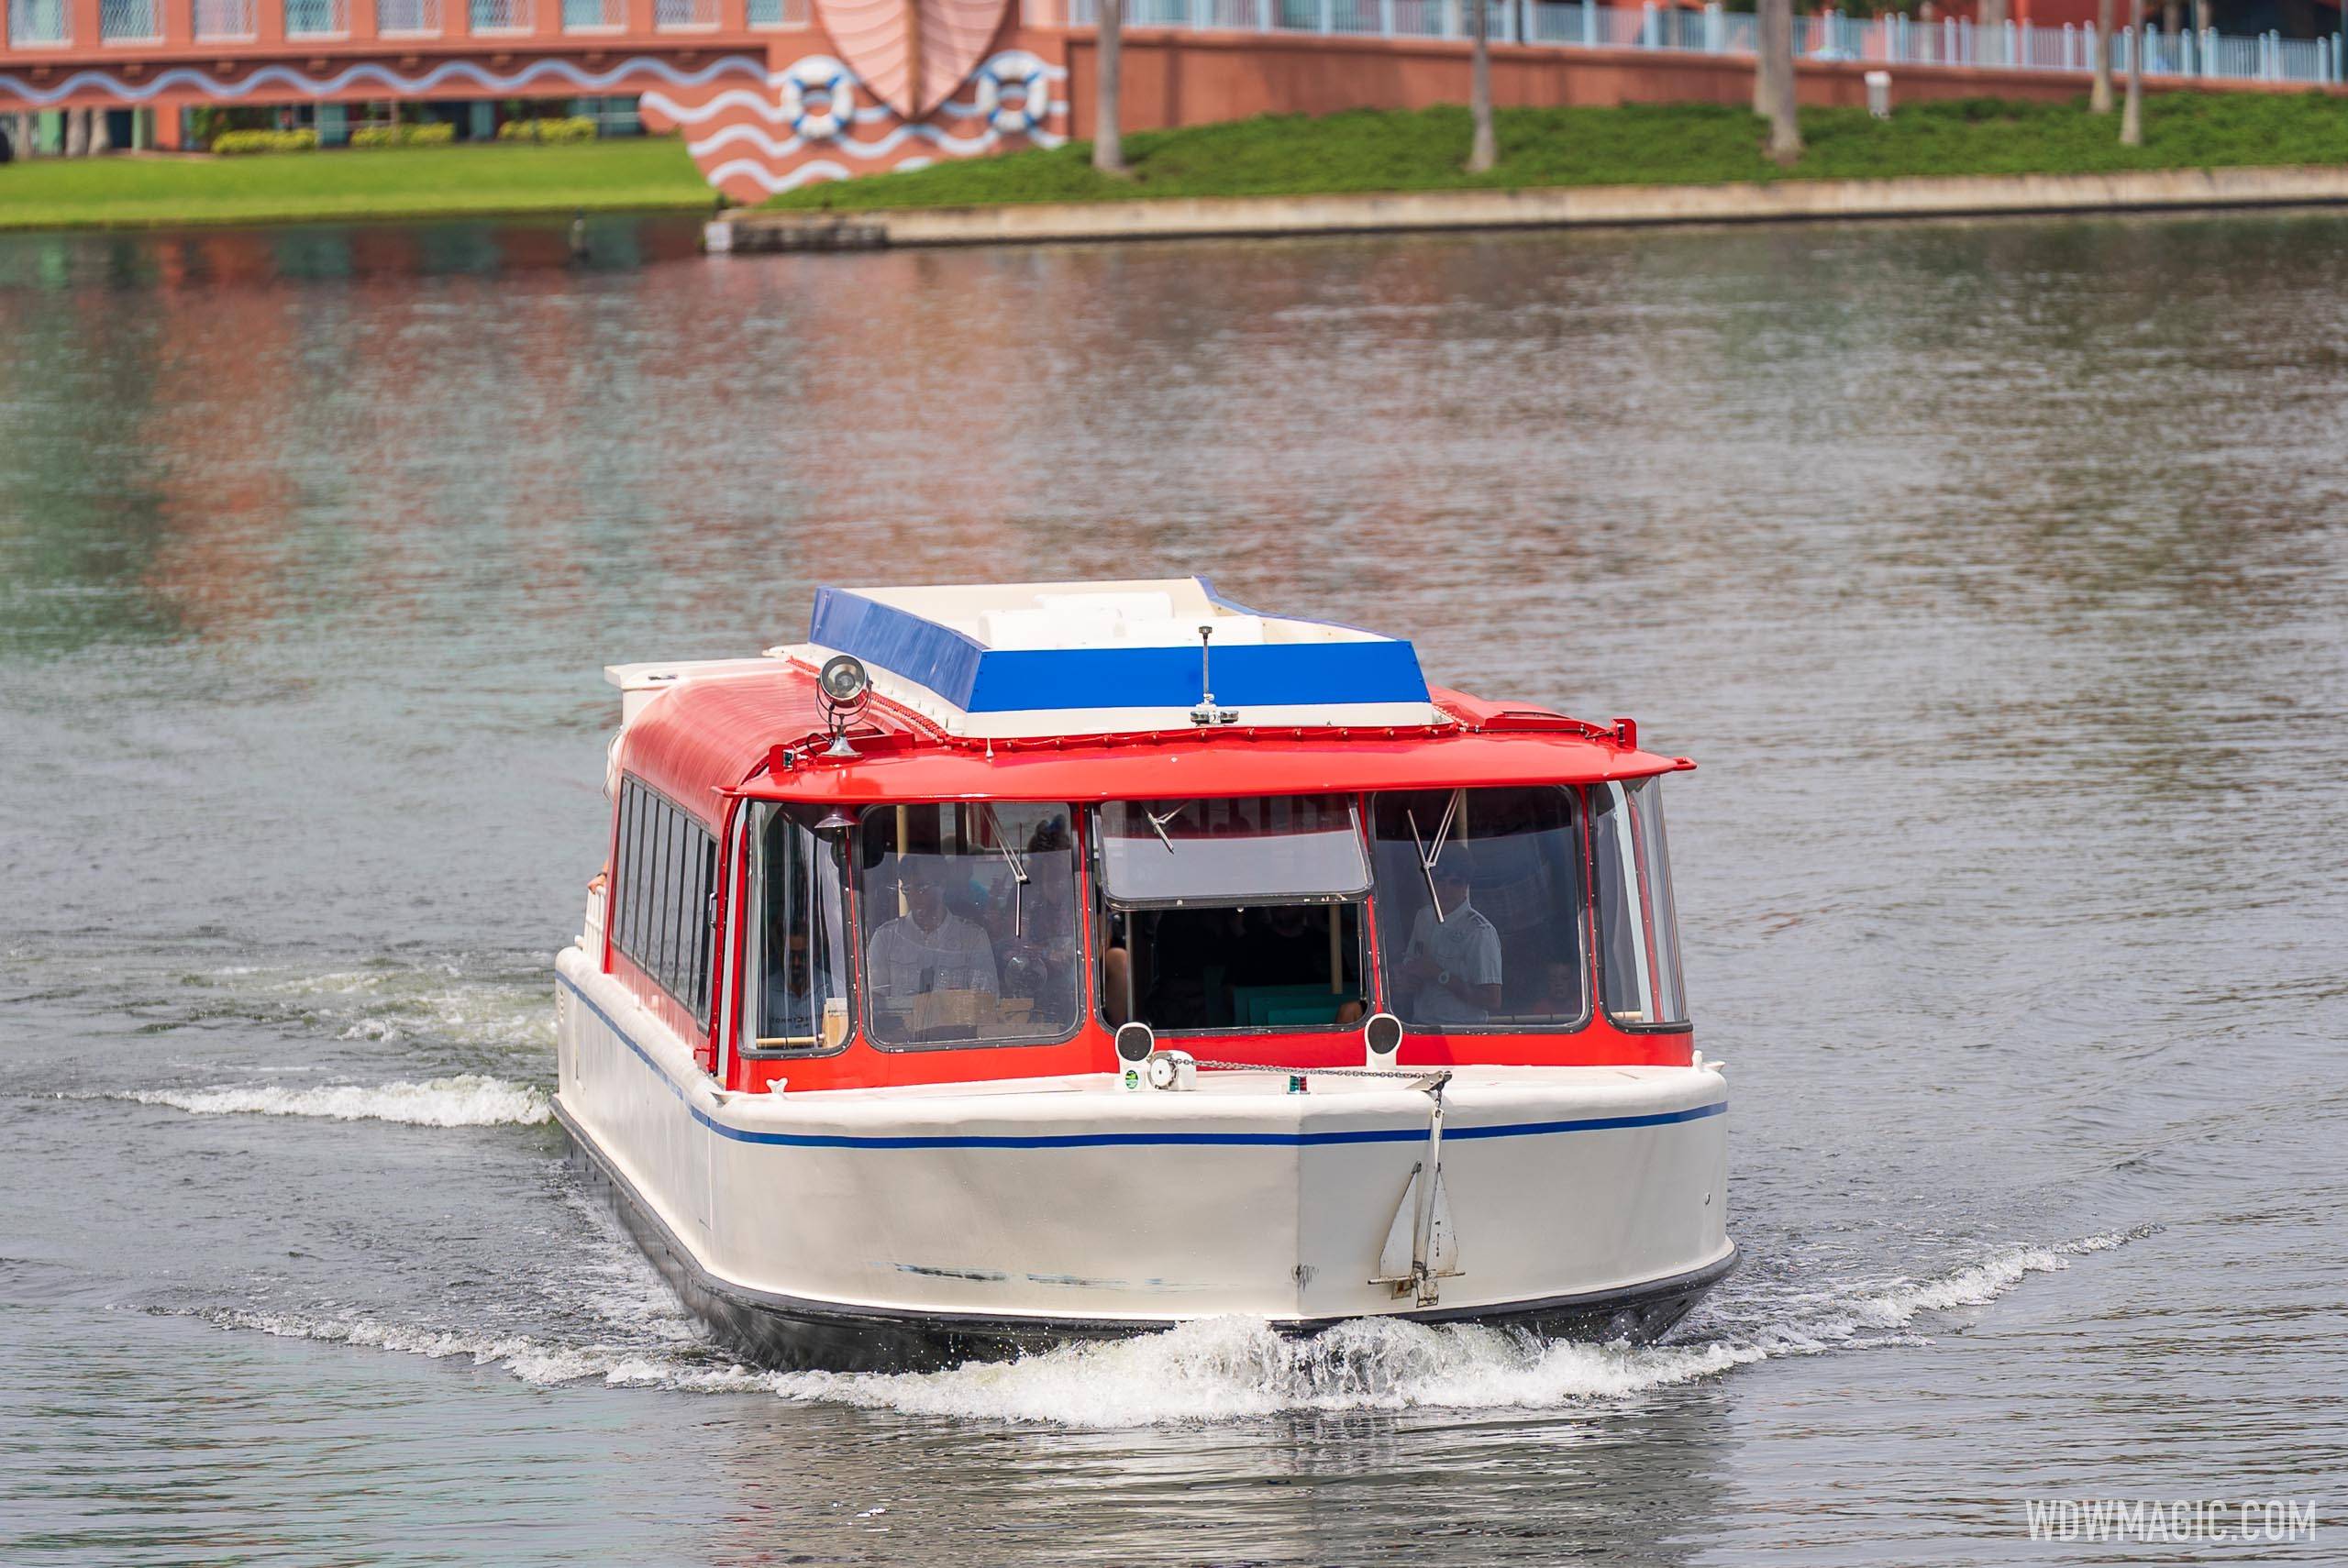 New look for Walt Disney World's EPCOT area Friendship Boats